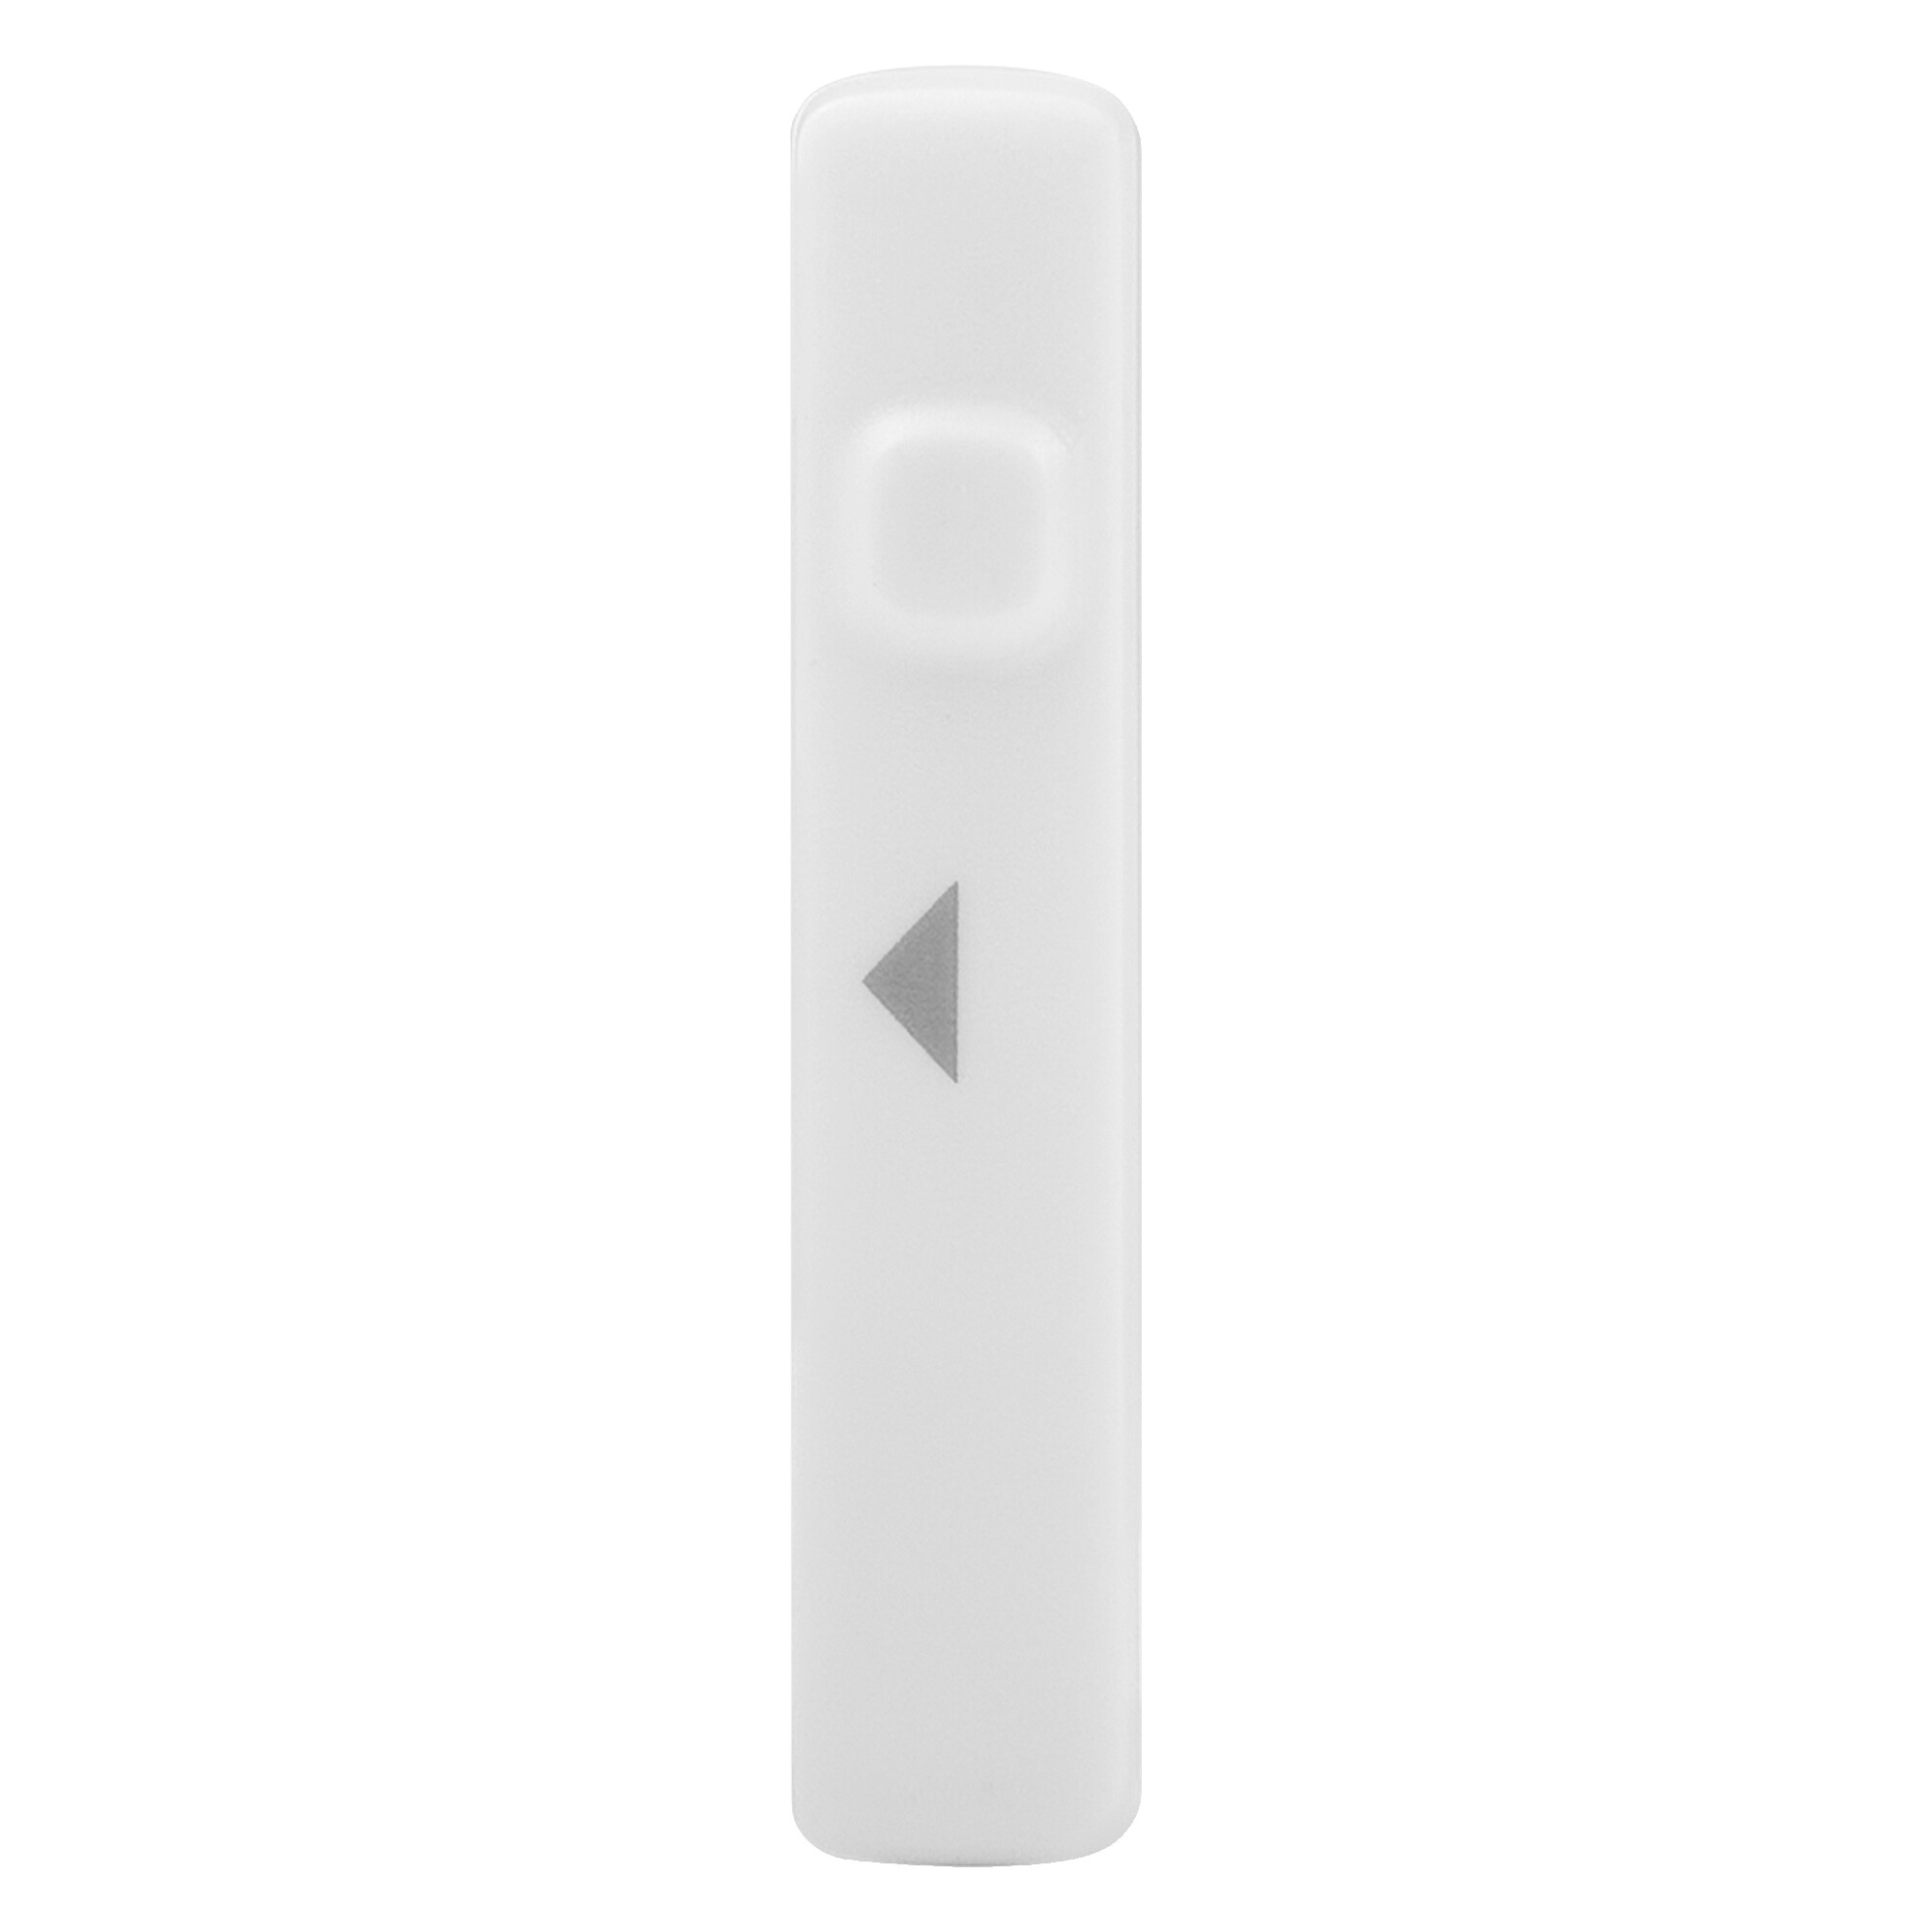 Kontaktsensor 'Smart+ WiFi' weiß 3,7 V + product picture